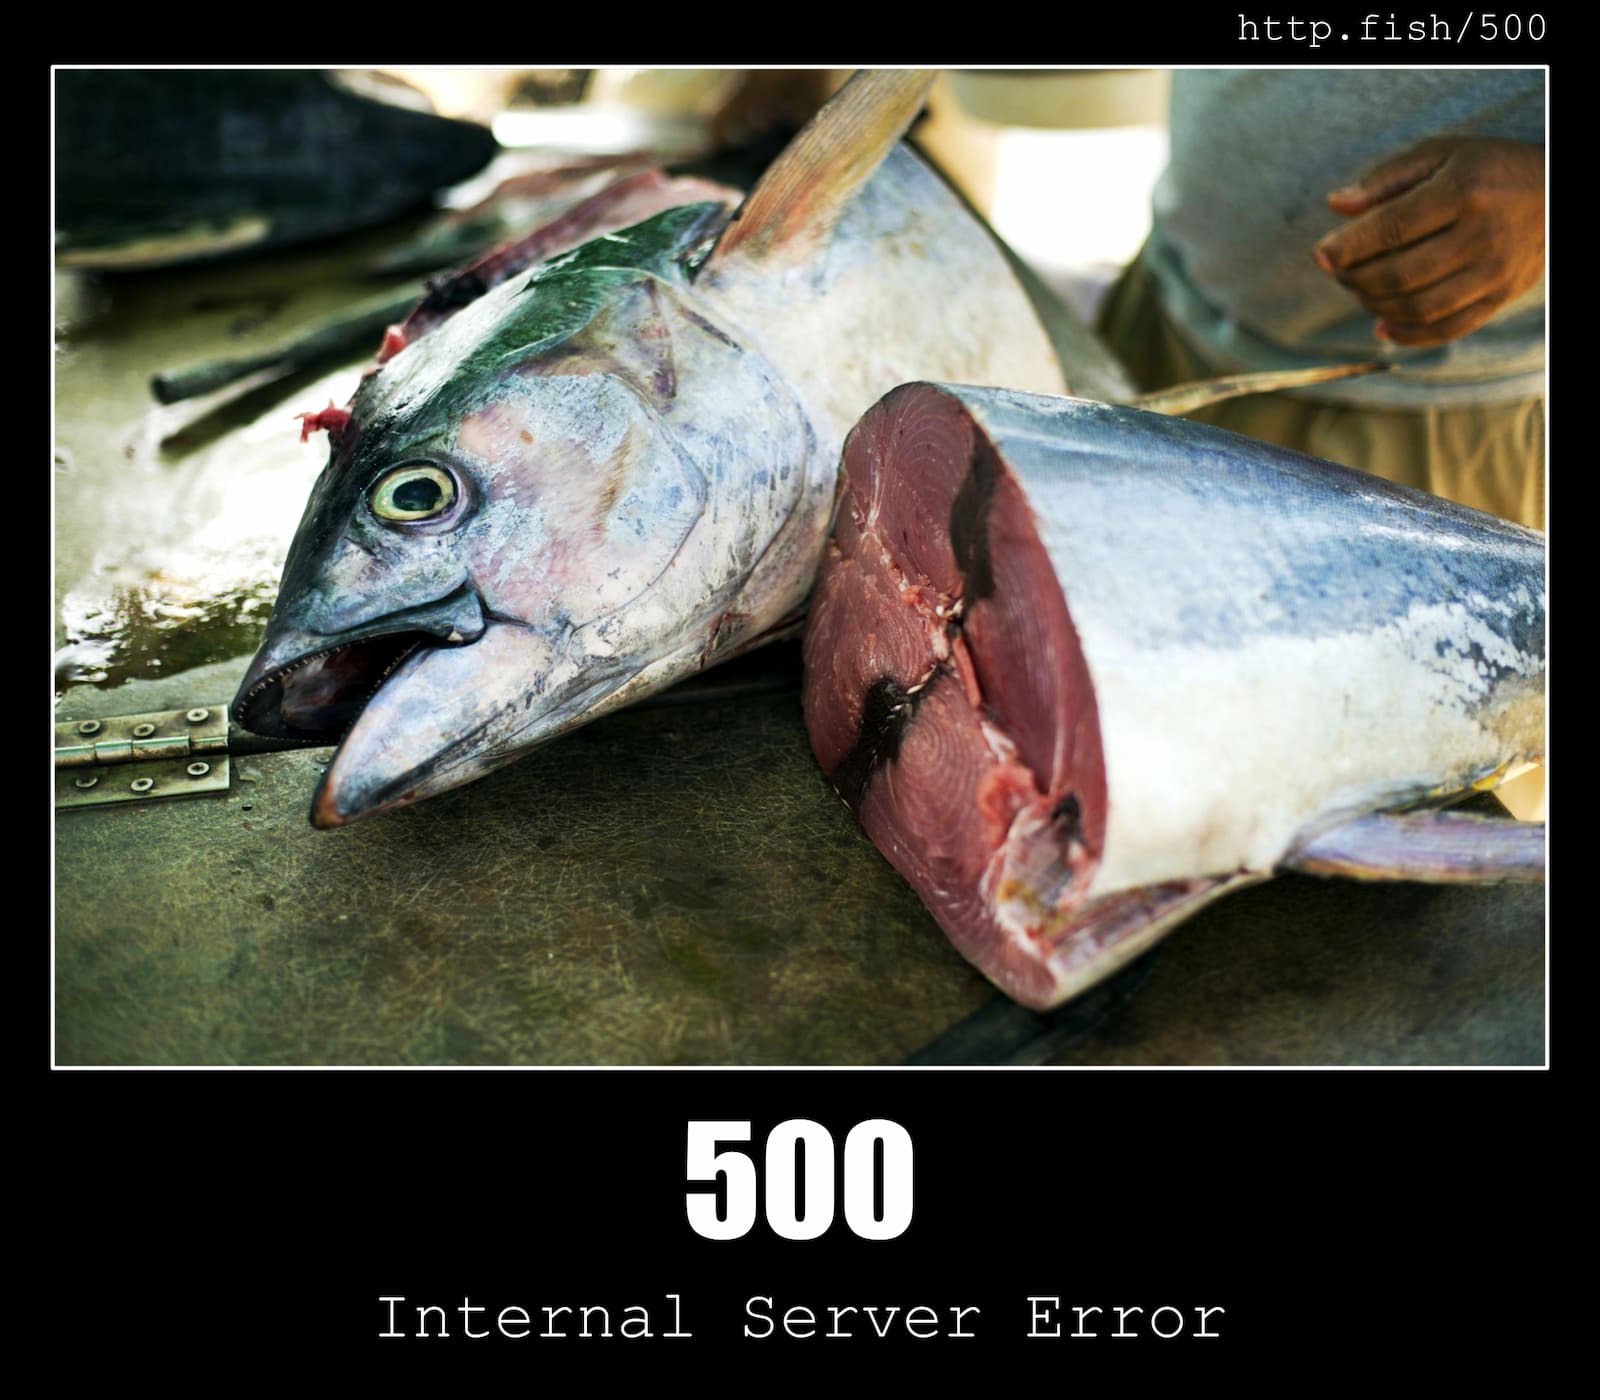 HTTP Status Code 500 Internal Server Error & Fish